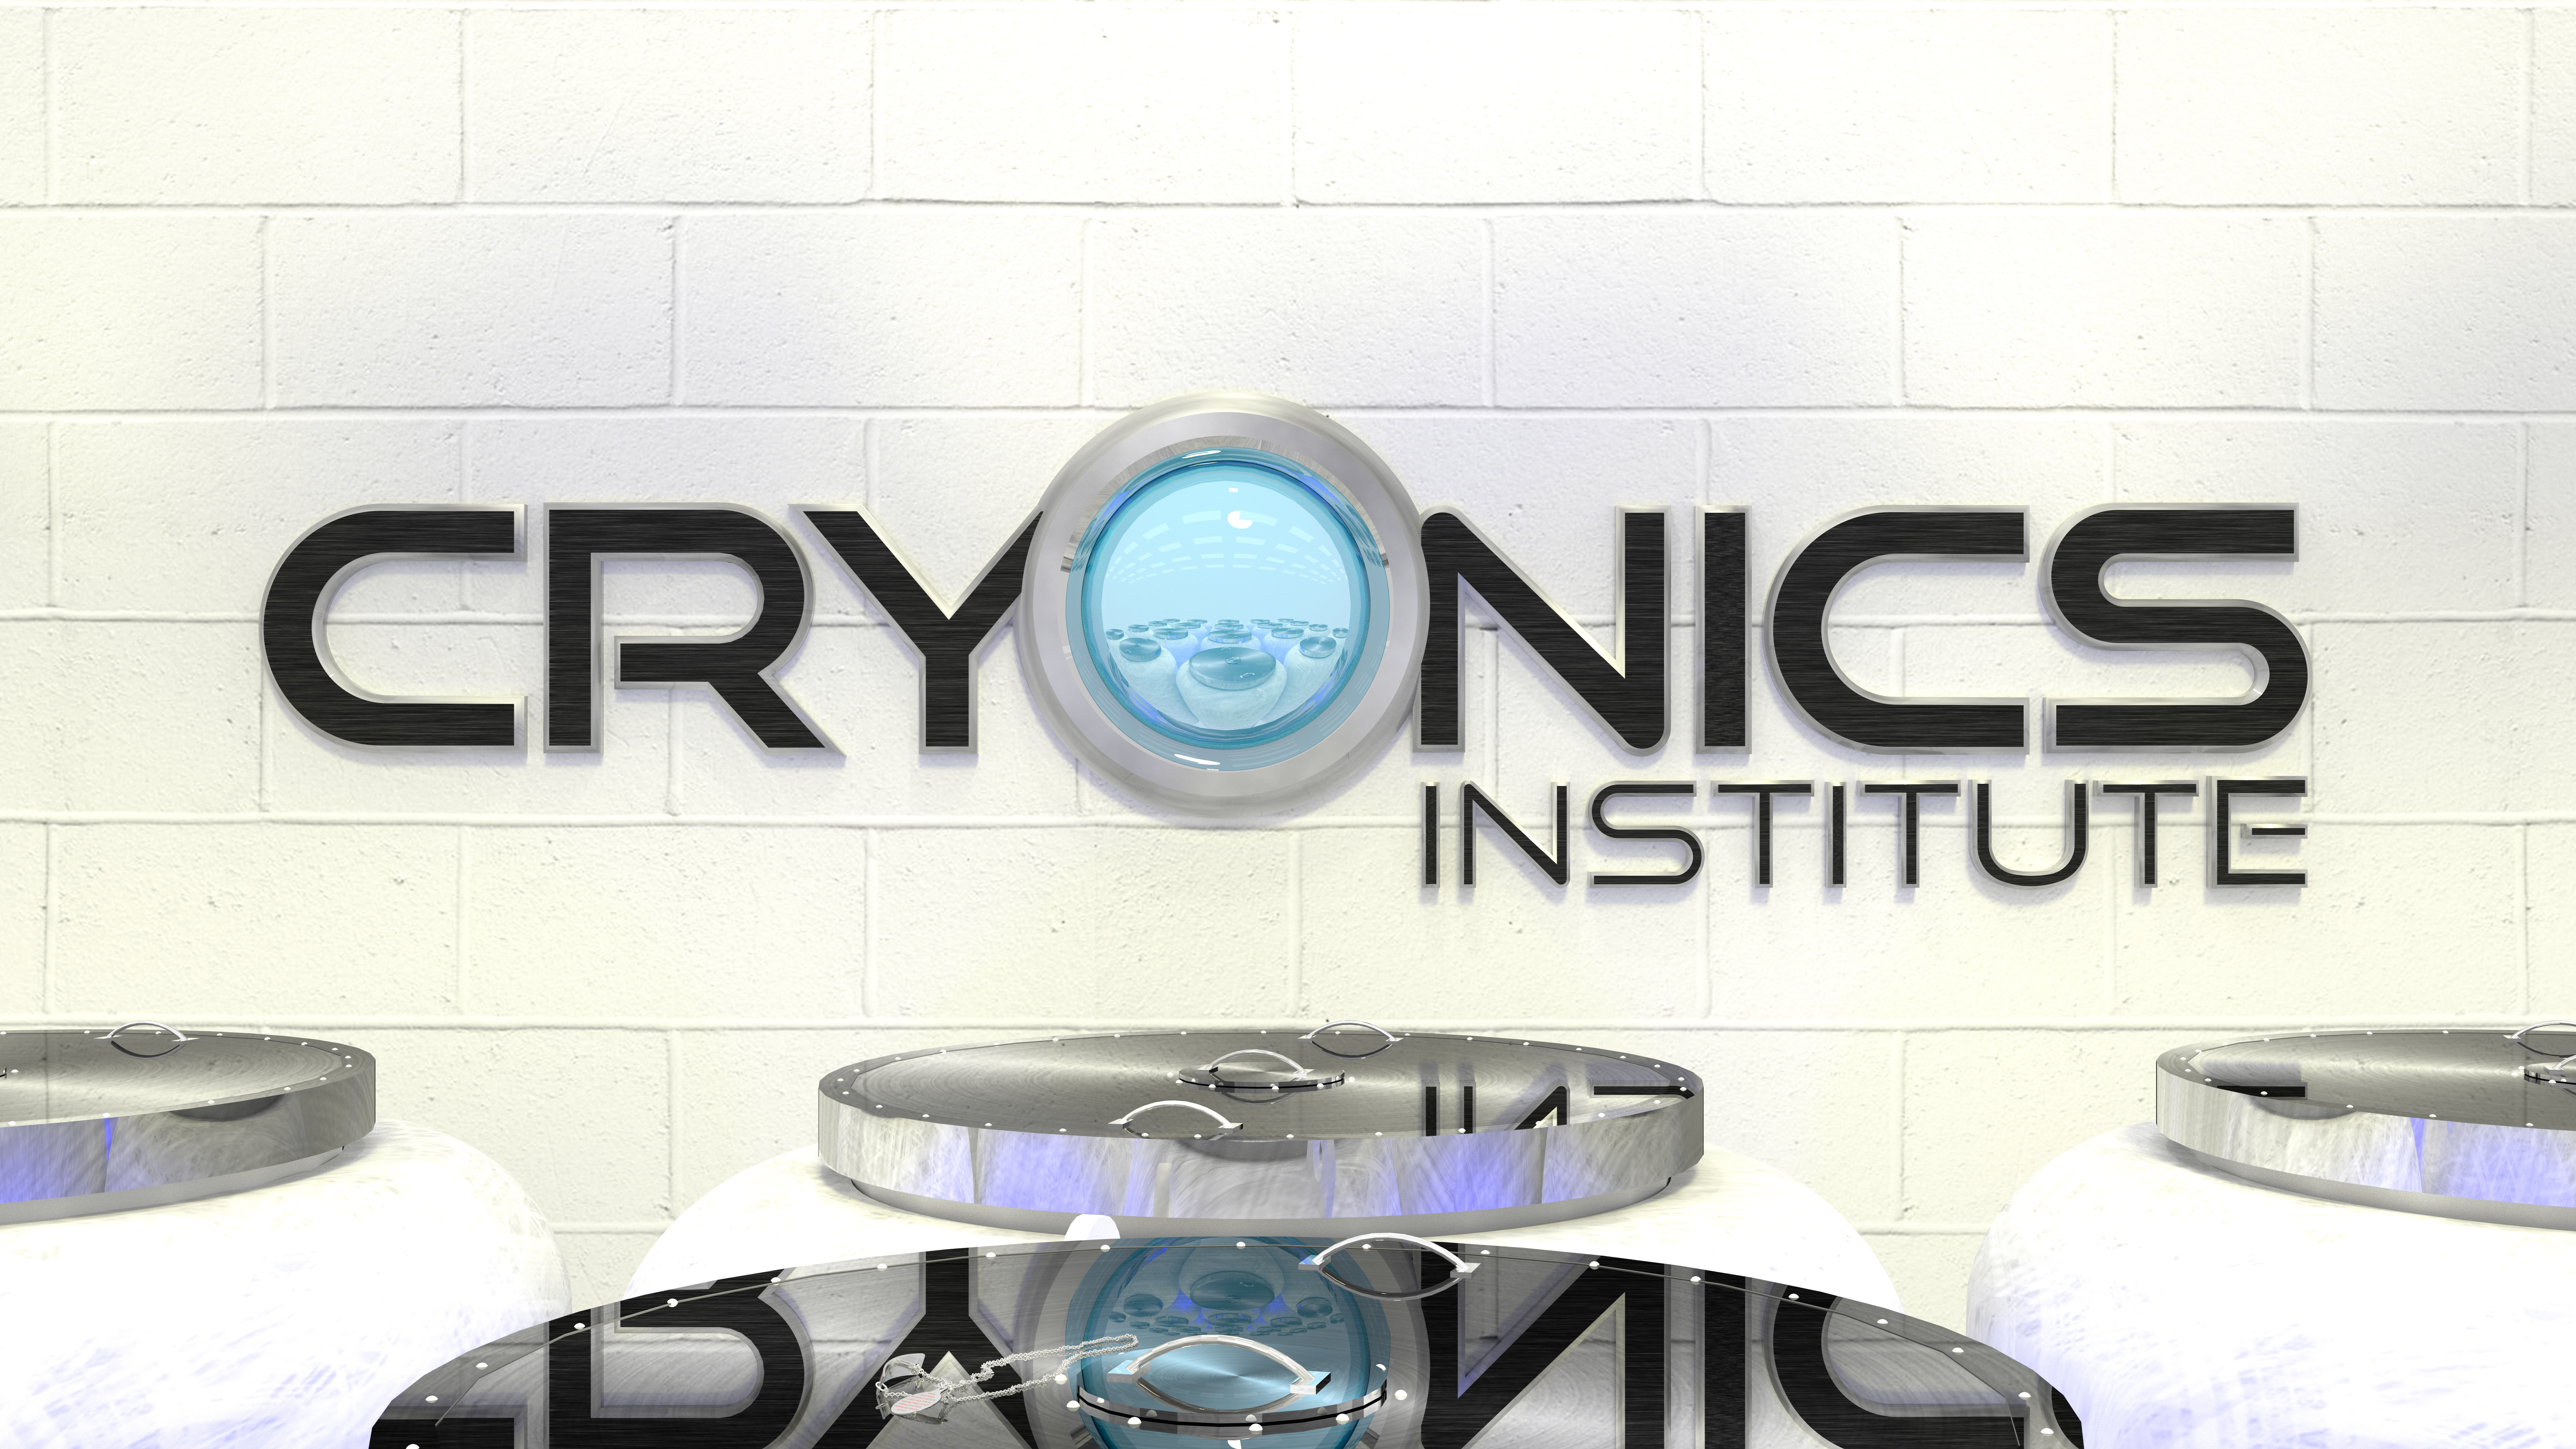 General 7680x4320 Cryonics Cryonics Institute CGI logo Blender digital art